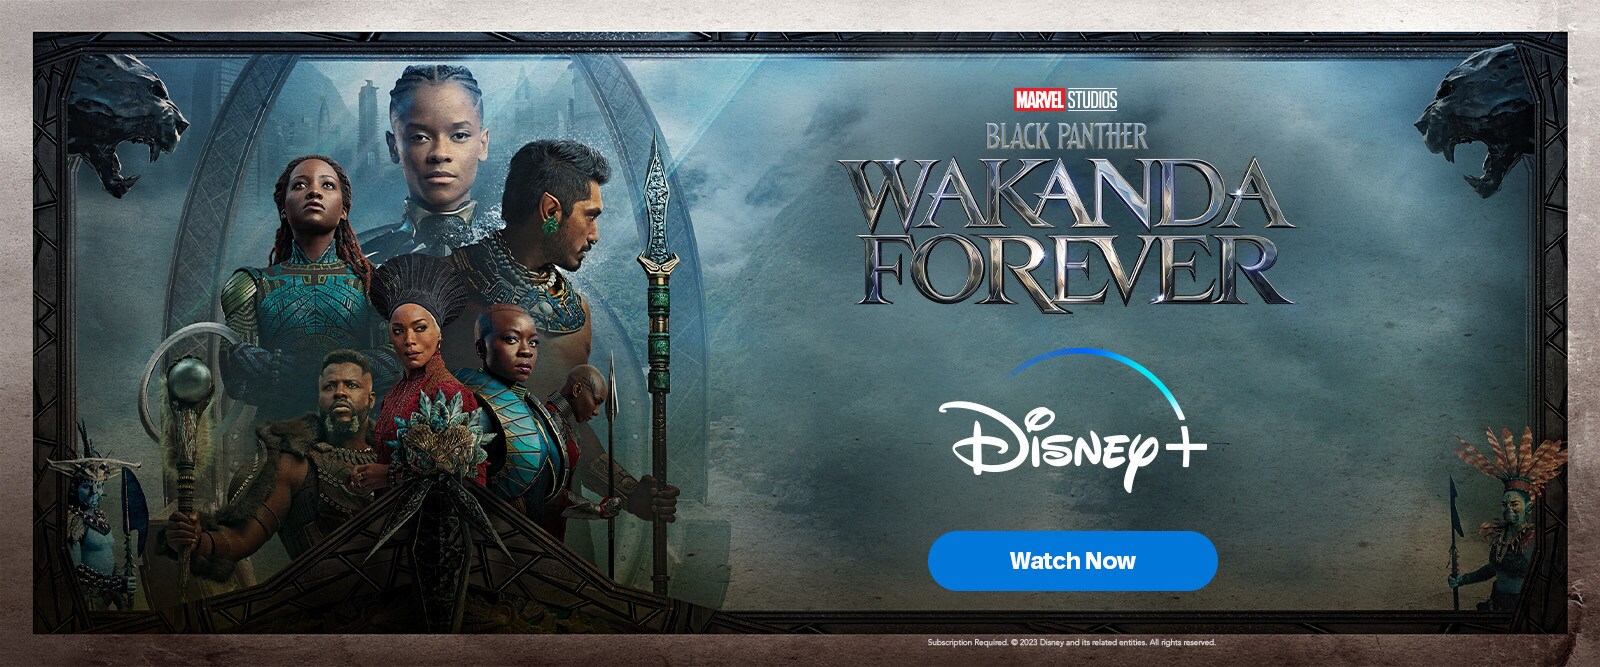 Disney+ Hotstar Marvel Studios' Black Panther: Wakanda Forever | Homepage Hero